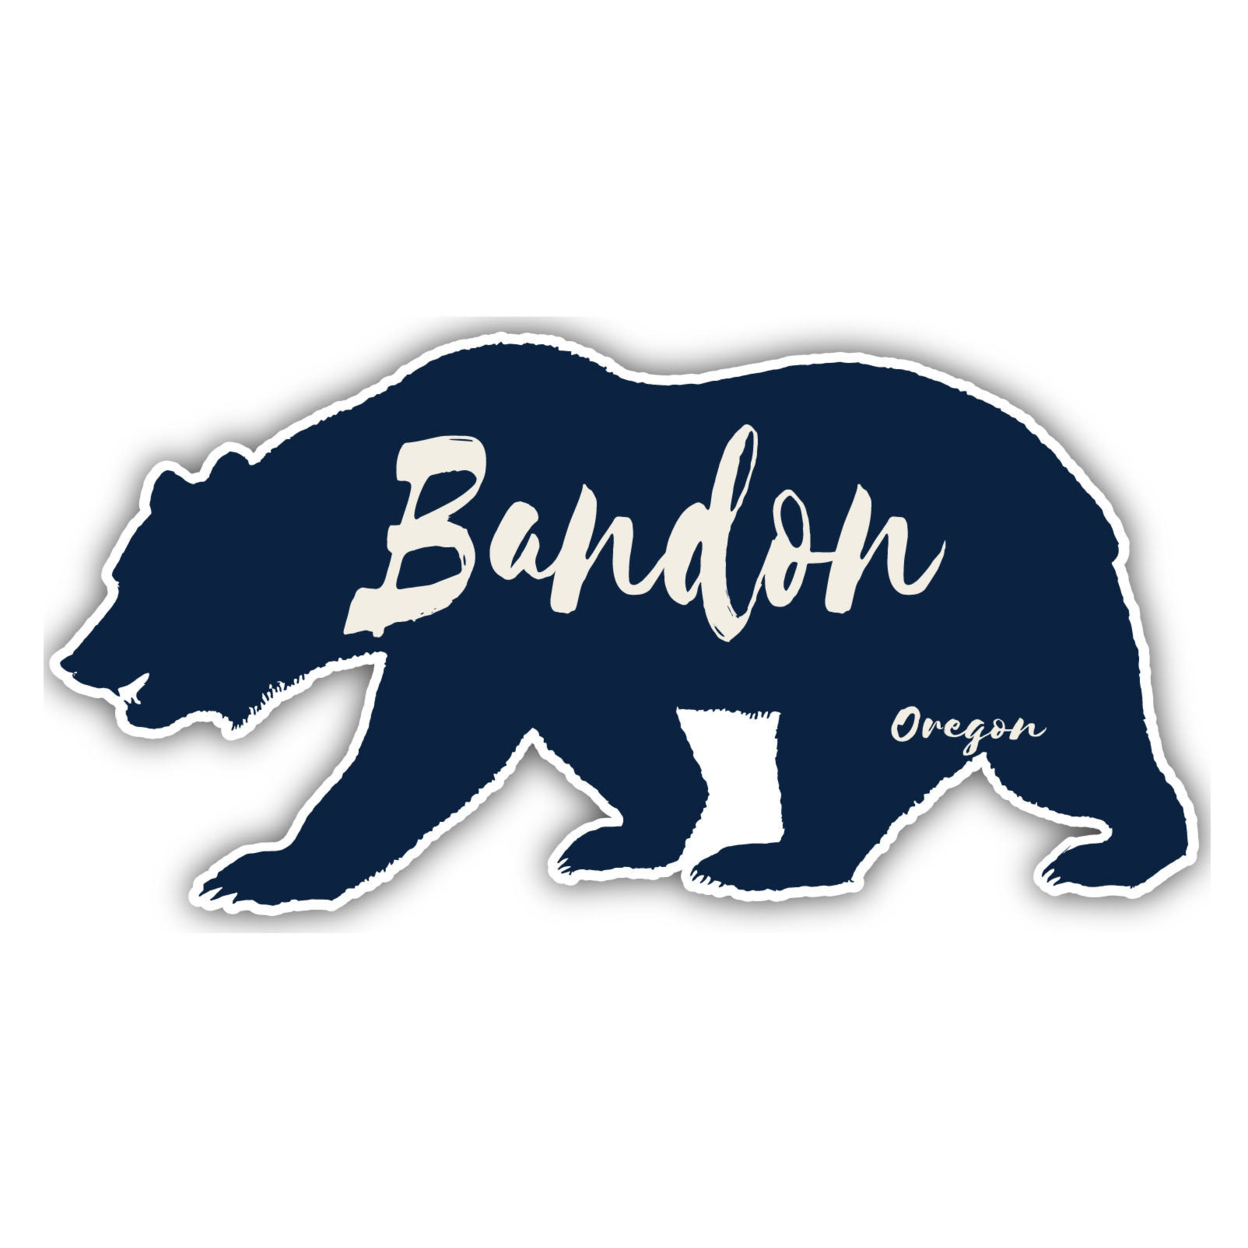 Bandon Oregon Souvenir Decorative Stickers (Choose Theme And Size) - Single Unit, 6-Inch, Bear